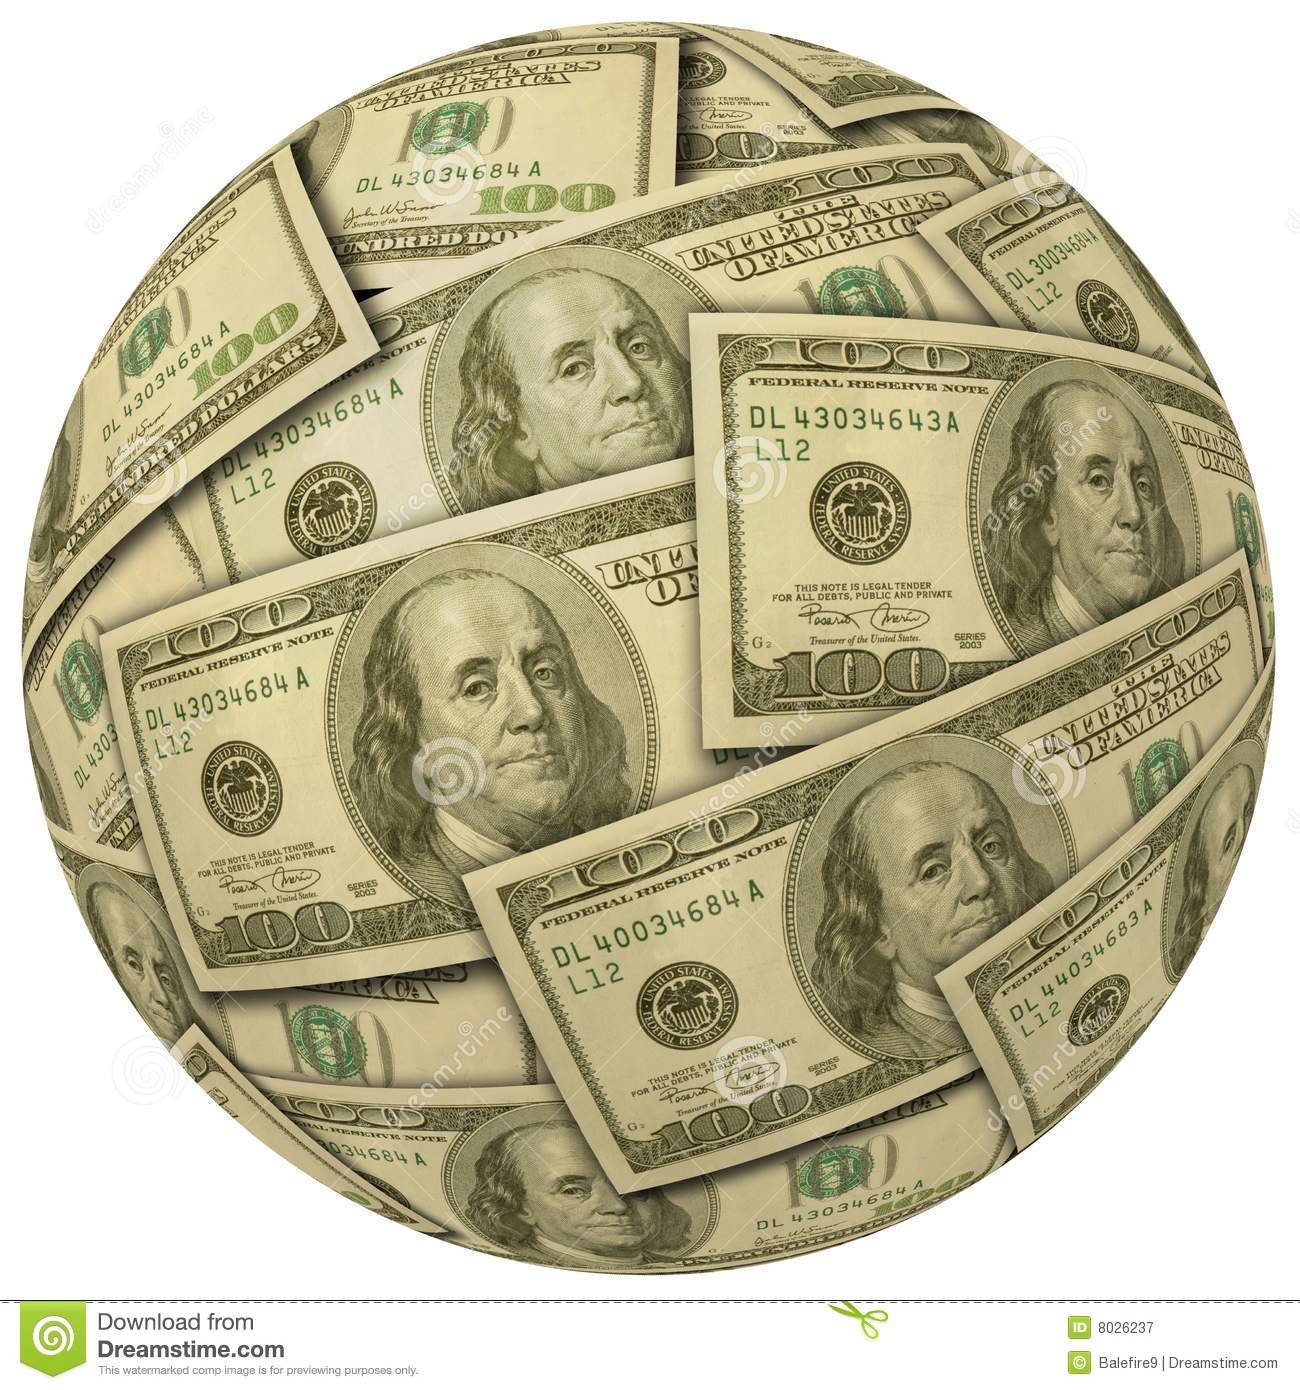 Ball Of  100 Bills Royalty Free Stock Photography   Image  8026237